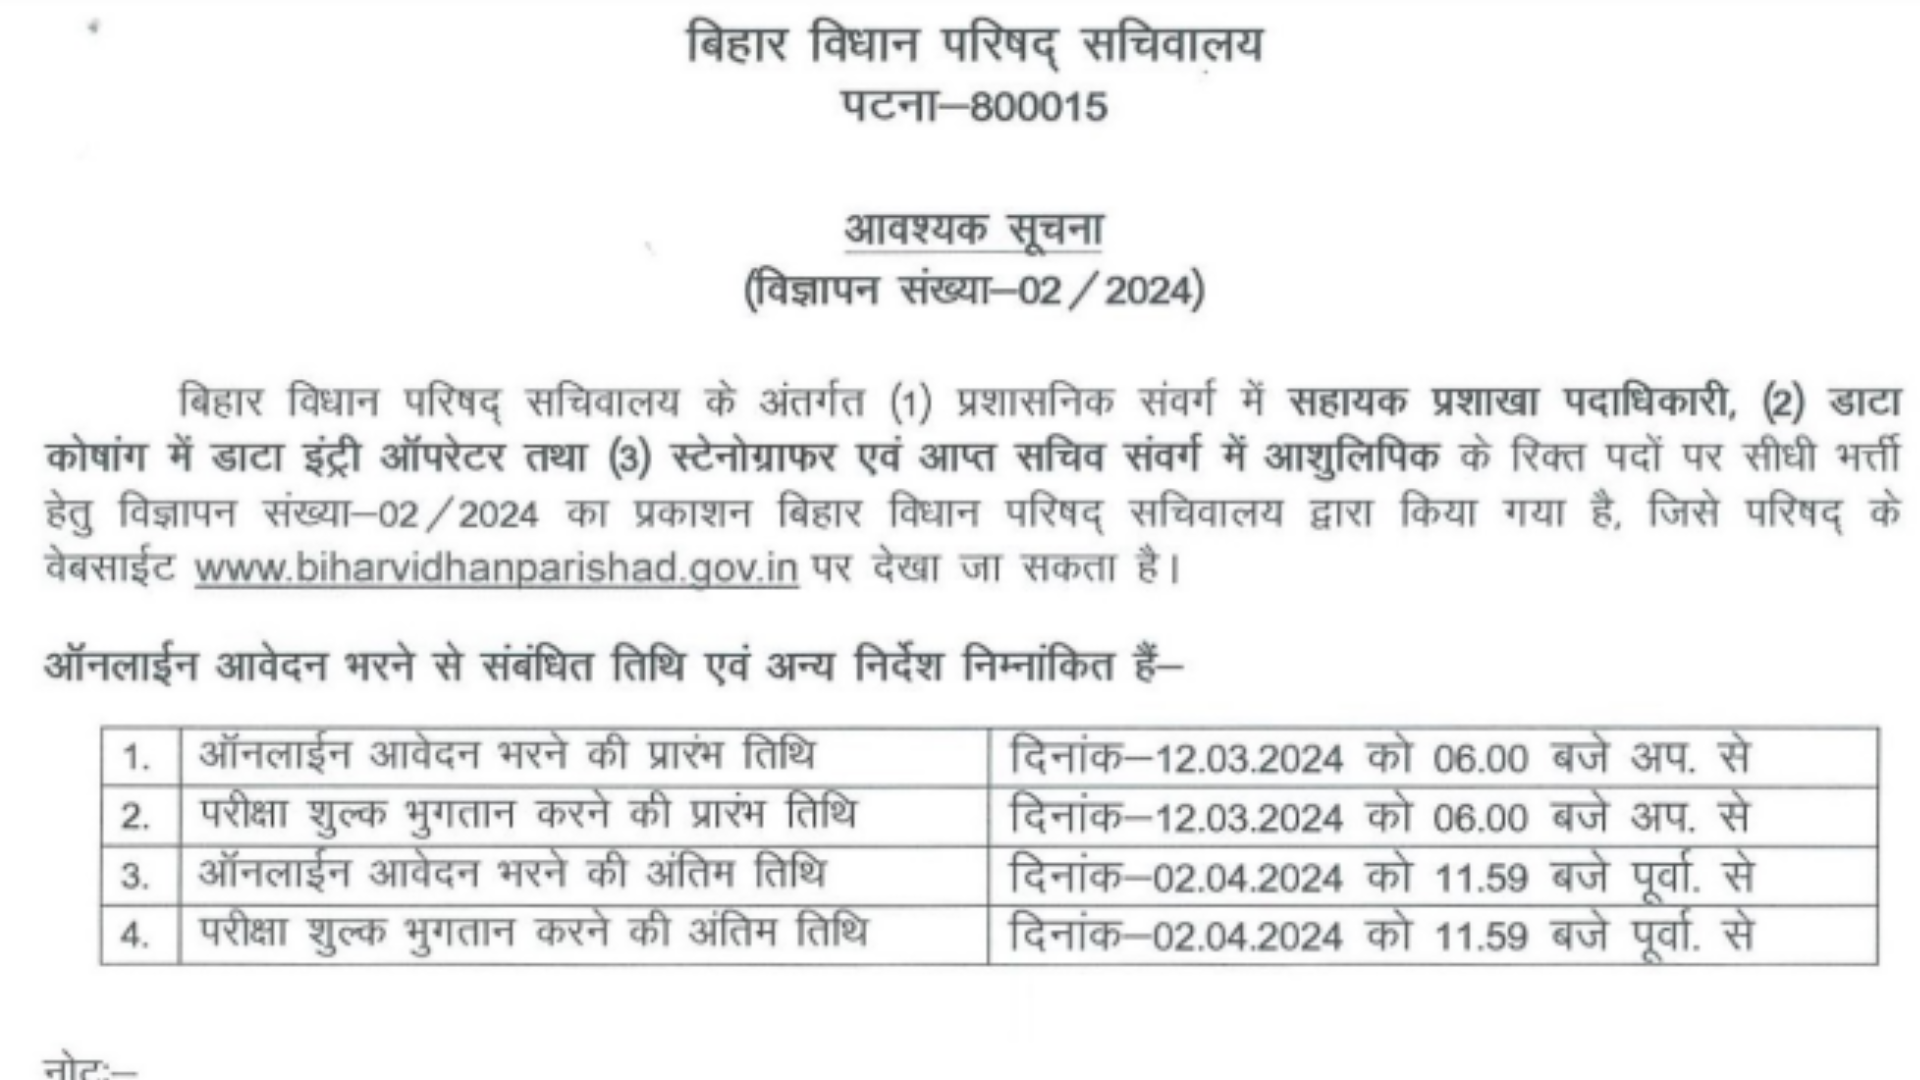 Bihar Legislative Council Vidhan Parishad Sachivalaya Assistant Branch Officer, DEO and Stenographer Recruitment 2024 Apply Online for 26 Post